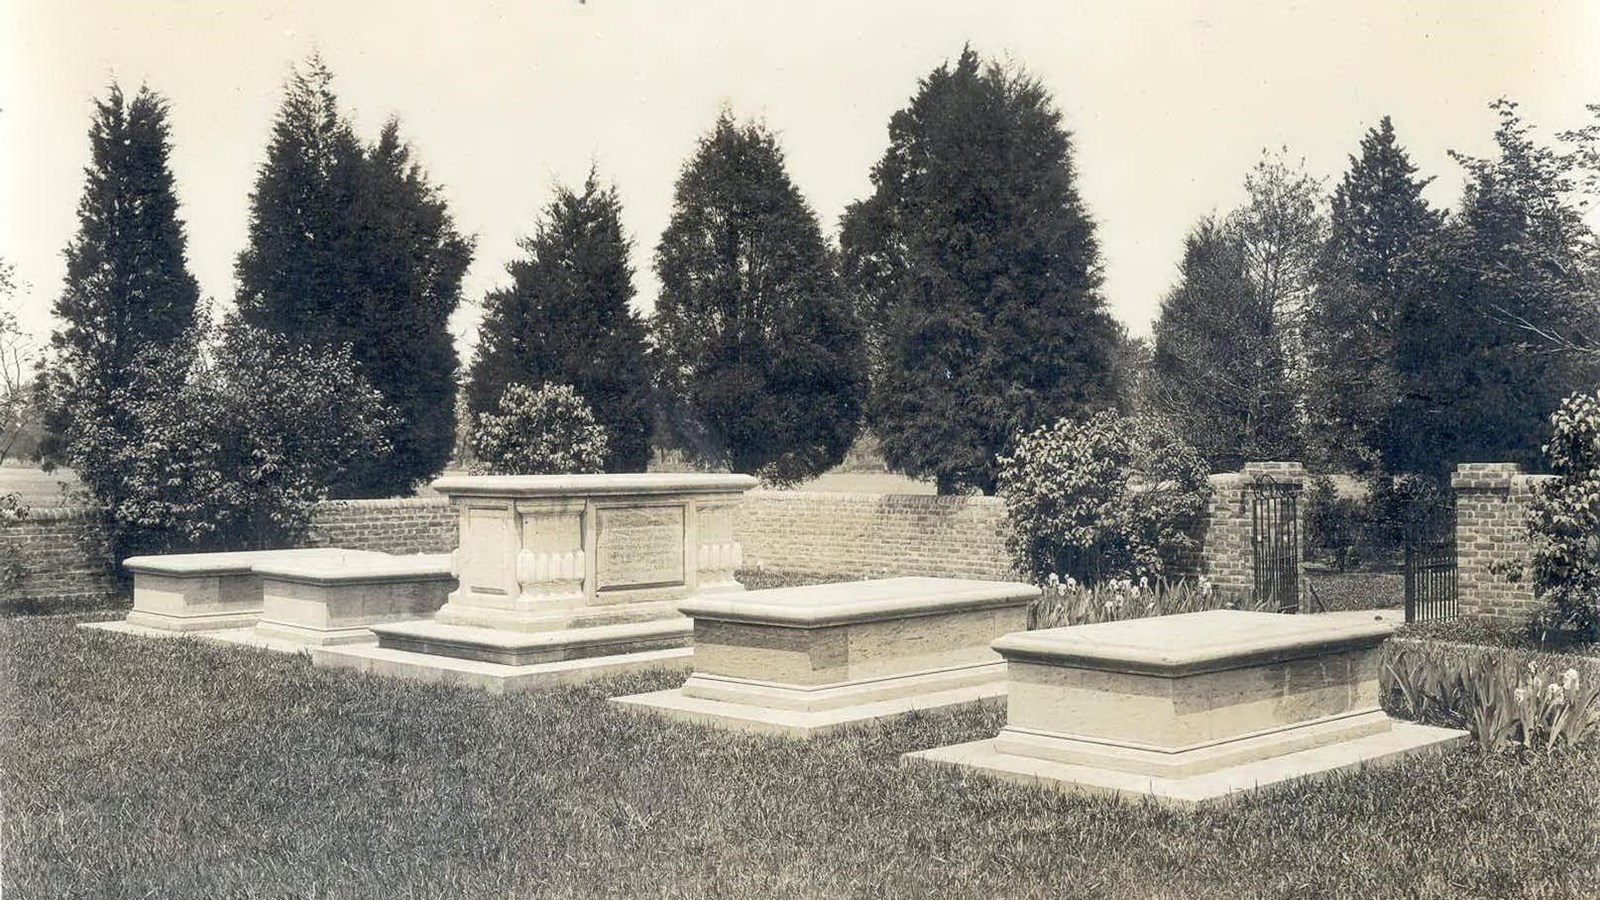 Washington Family Burial Ground